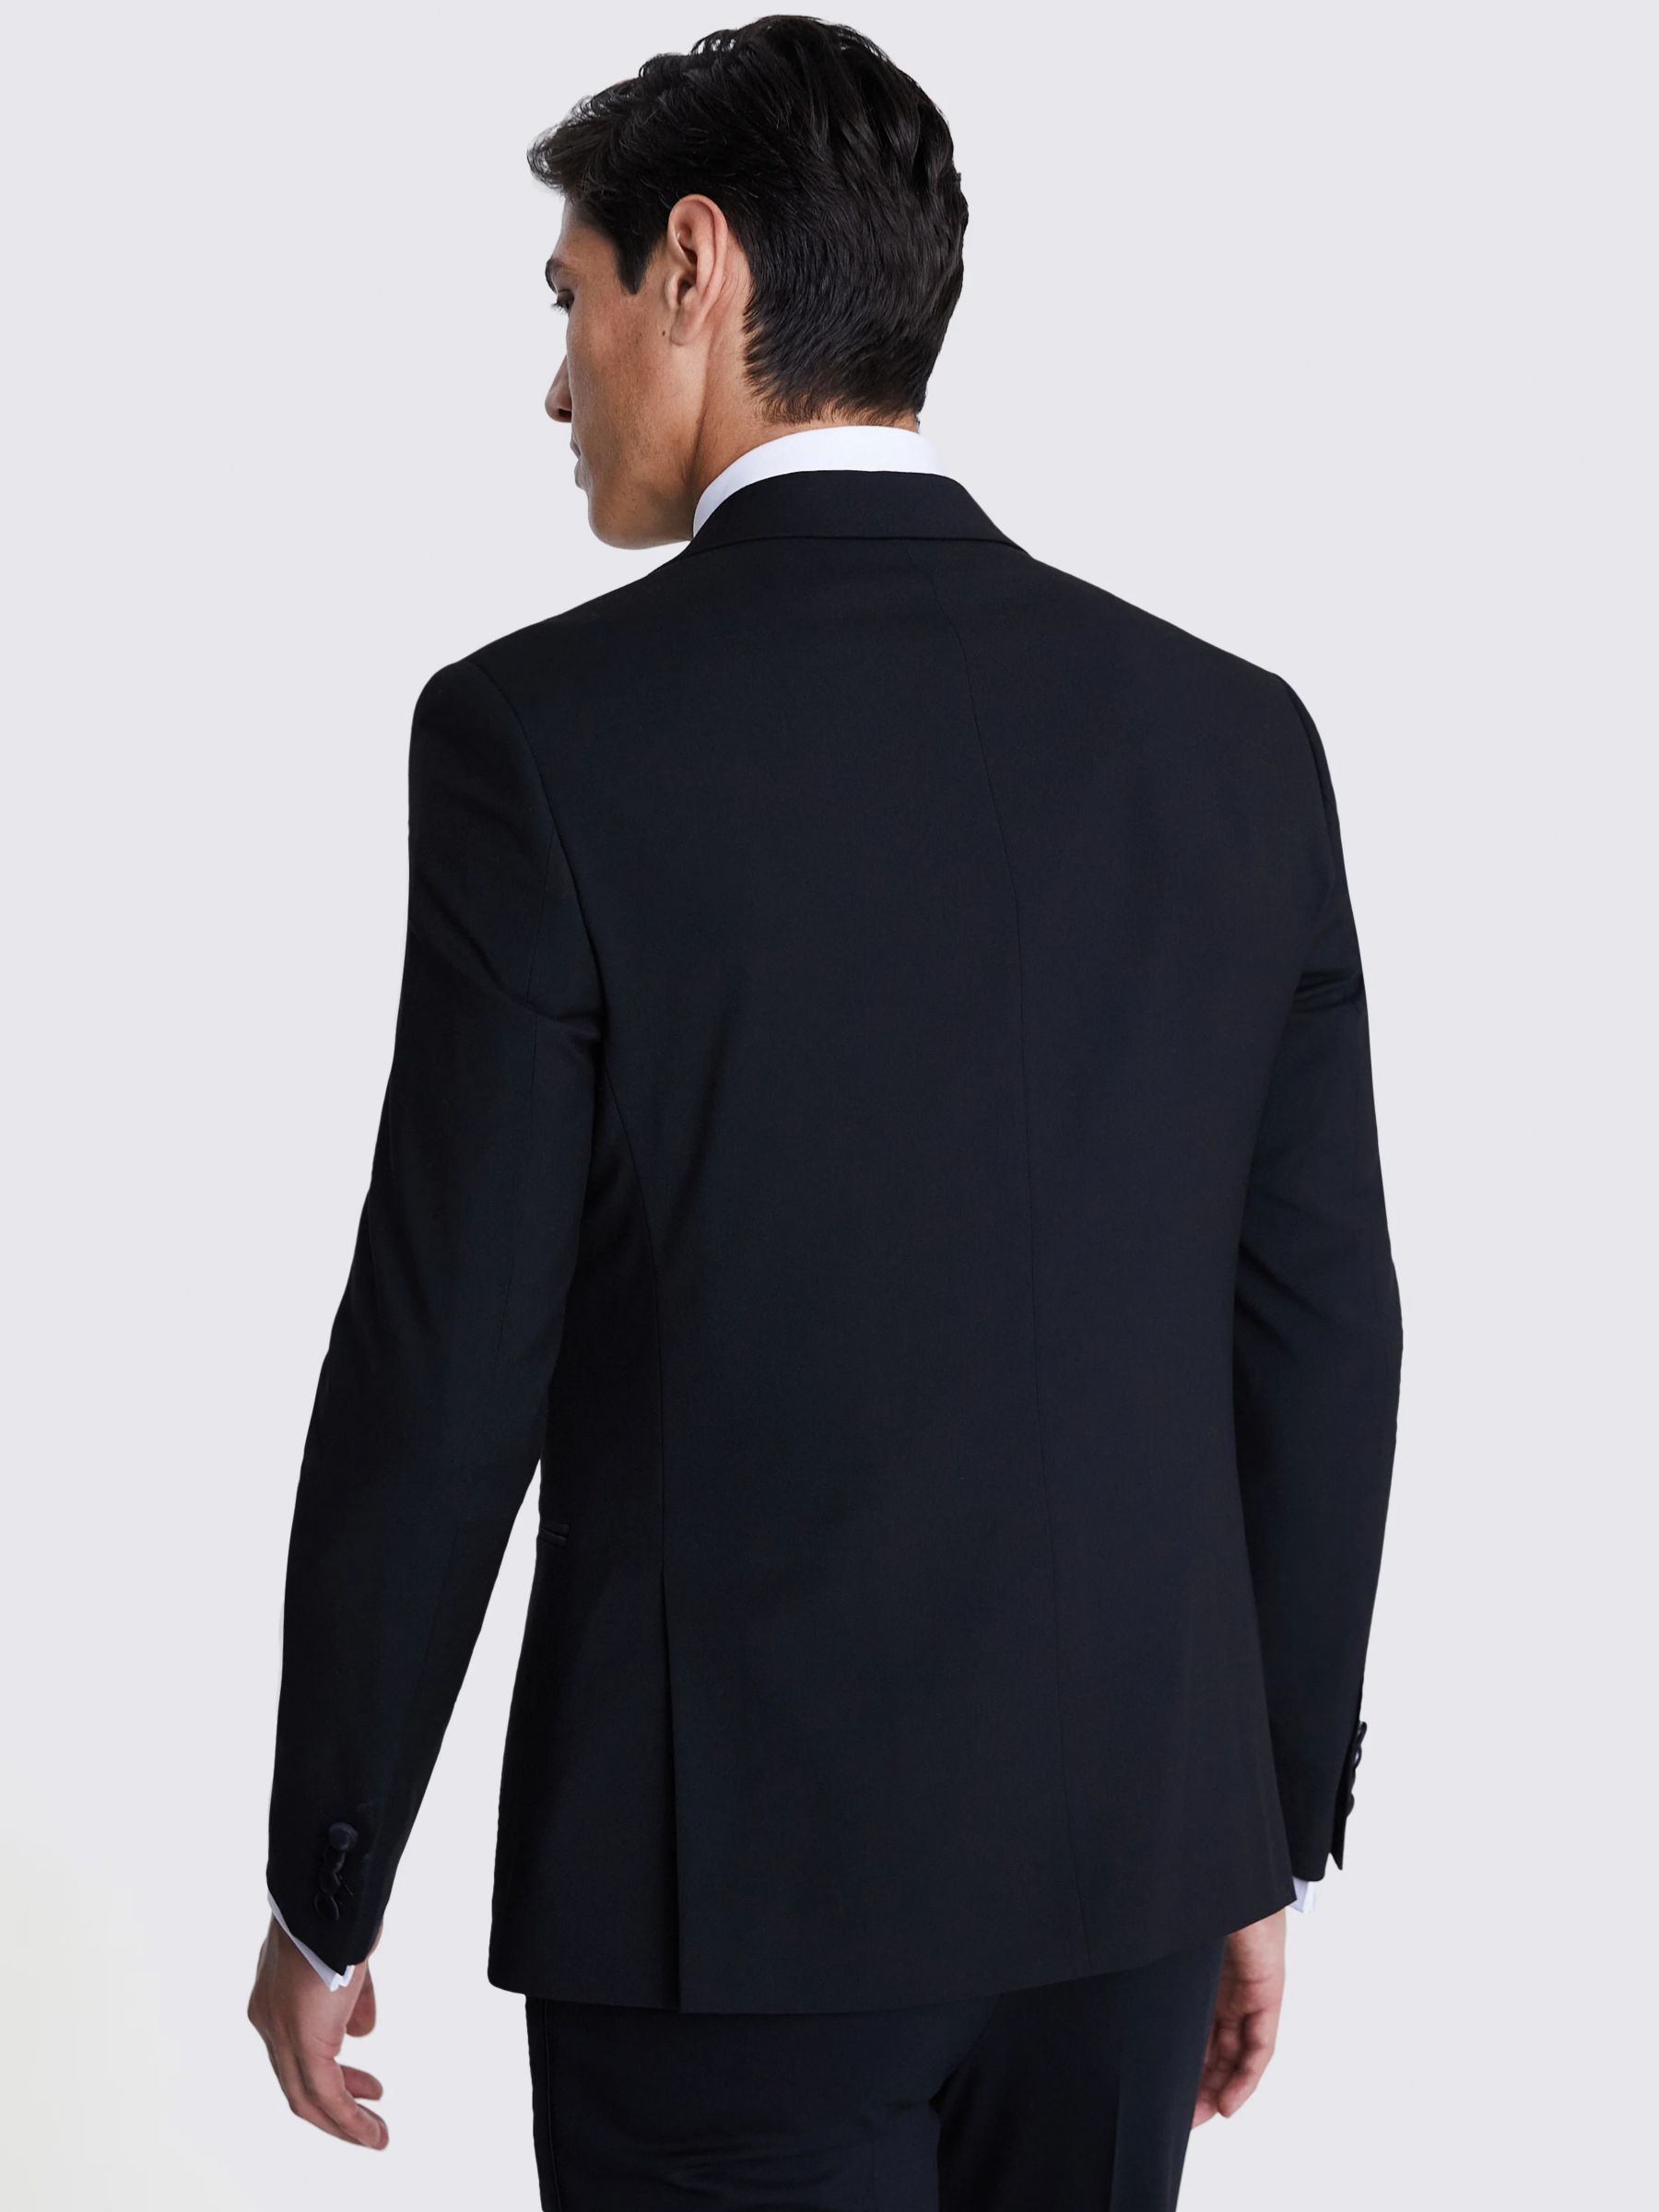 Buy Moss Slim Fit Peak Lapel Tuxedo Jacket, Black Online at johnlewis.com